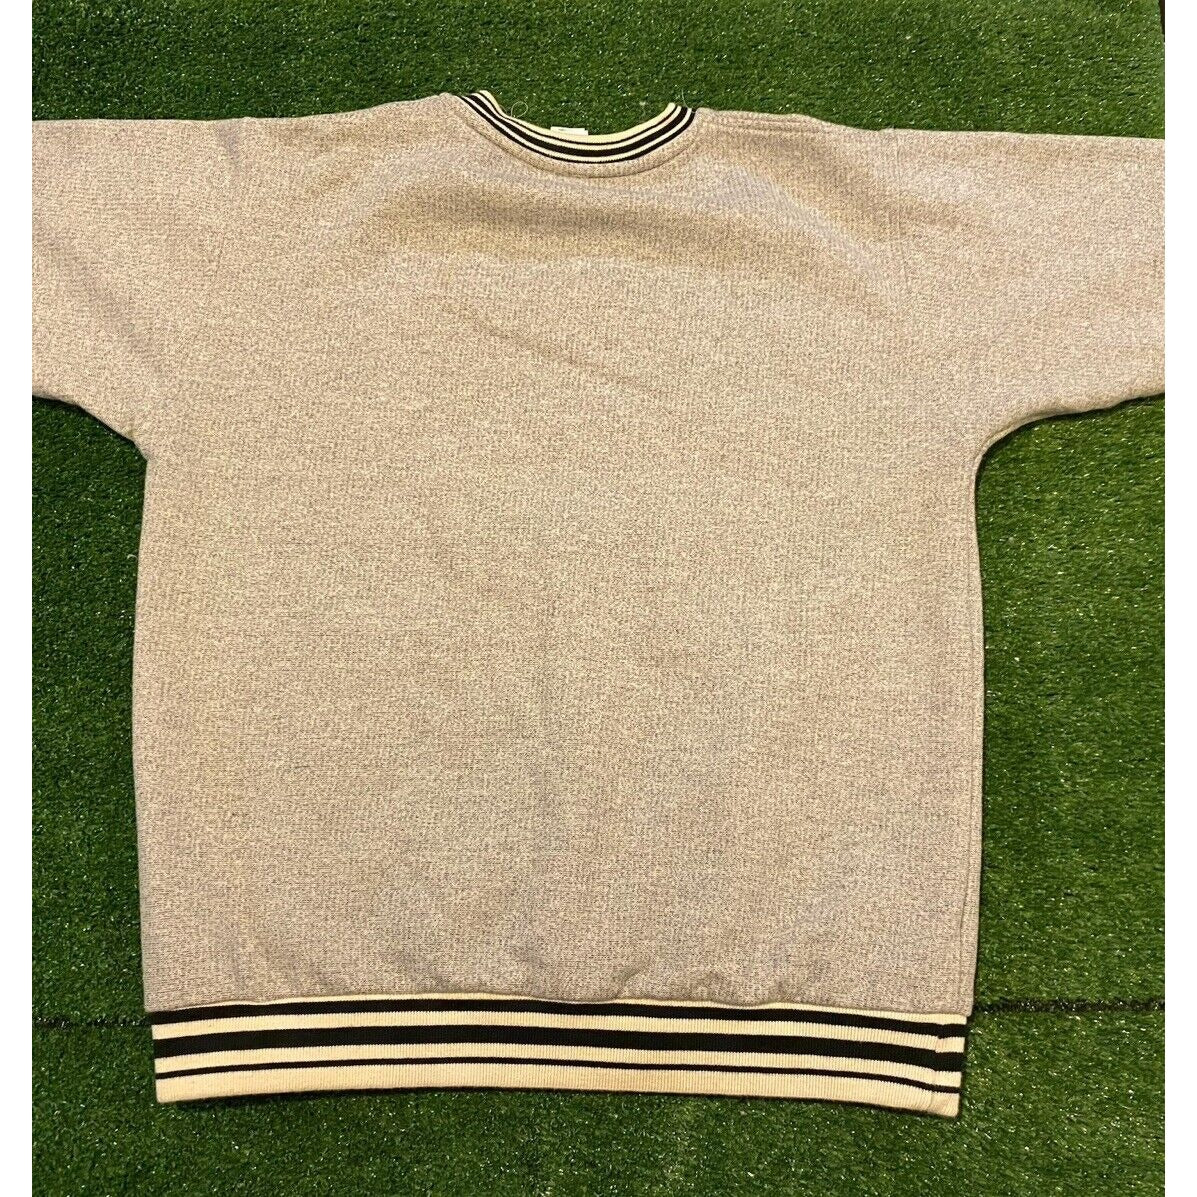 Vintage Cleveland browns sweatshirt large gray 90s Retro mens adult crew neck